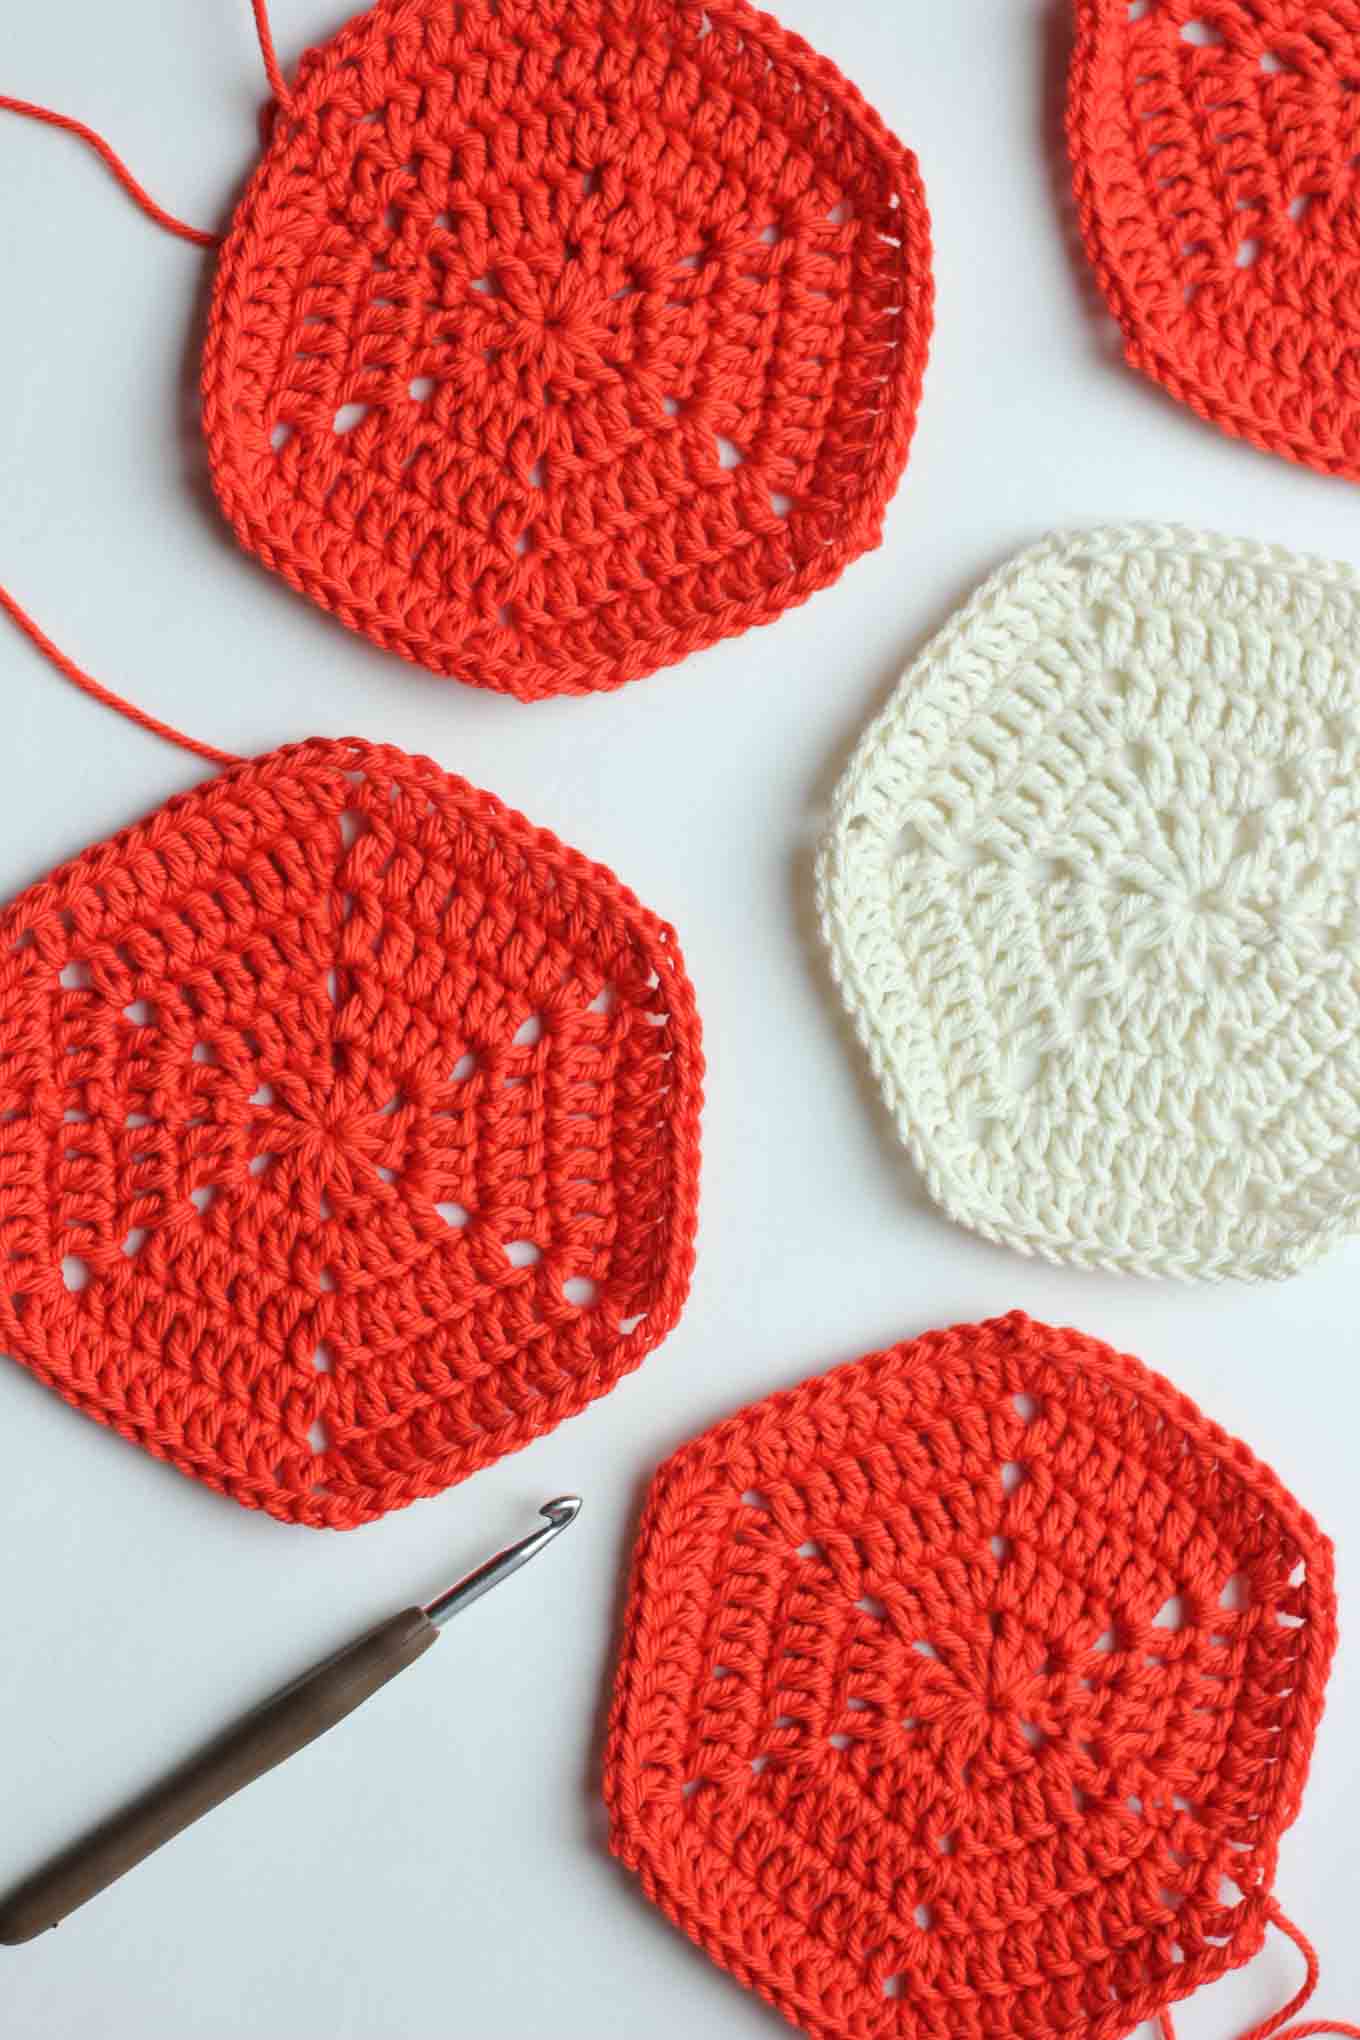 hexagon crochet pattern free basic crochet hexagon pattern. super clear step-by-step photo tutorial. EHHBXQB